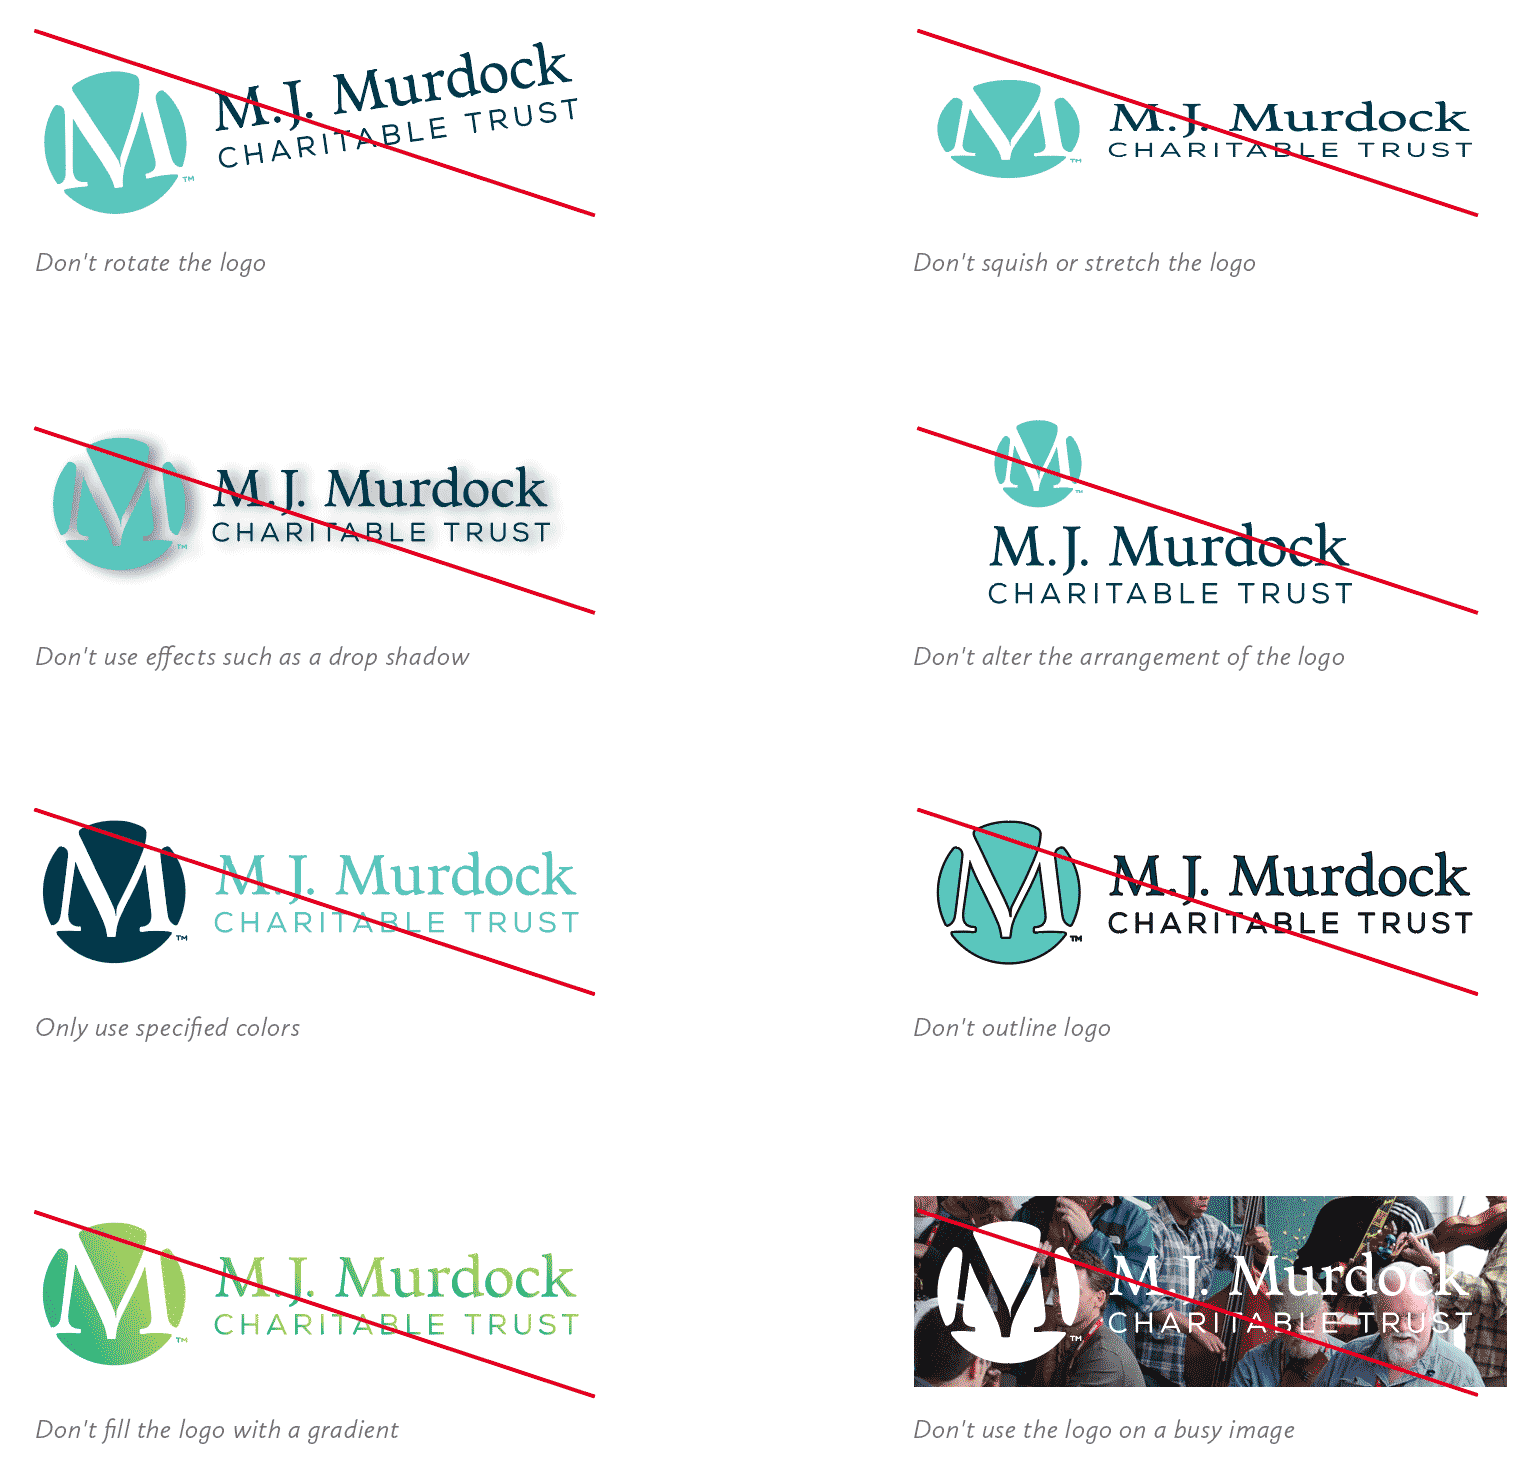 MJMCT logo rules